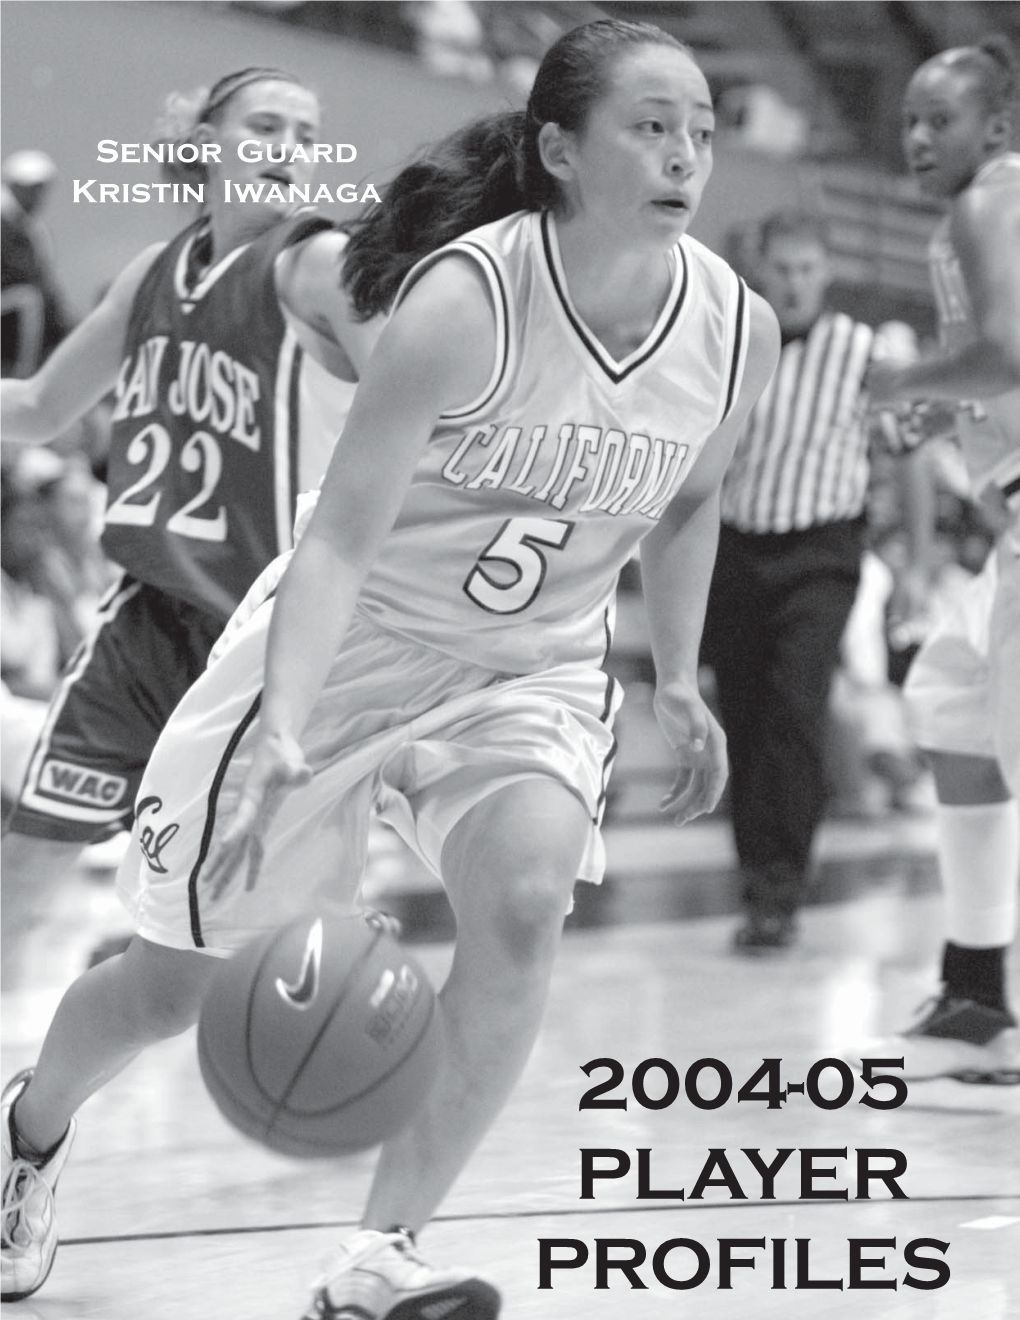 2004-05 PLAYER PROFILES 2004-05 PLAYER PROFILES Khadijah Coakley 44 6-1 • Center • Senior/3V San Diego, CA • Kearny HS